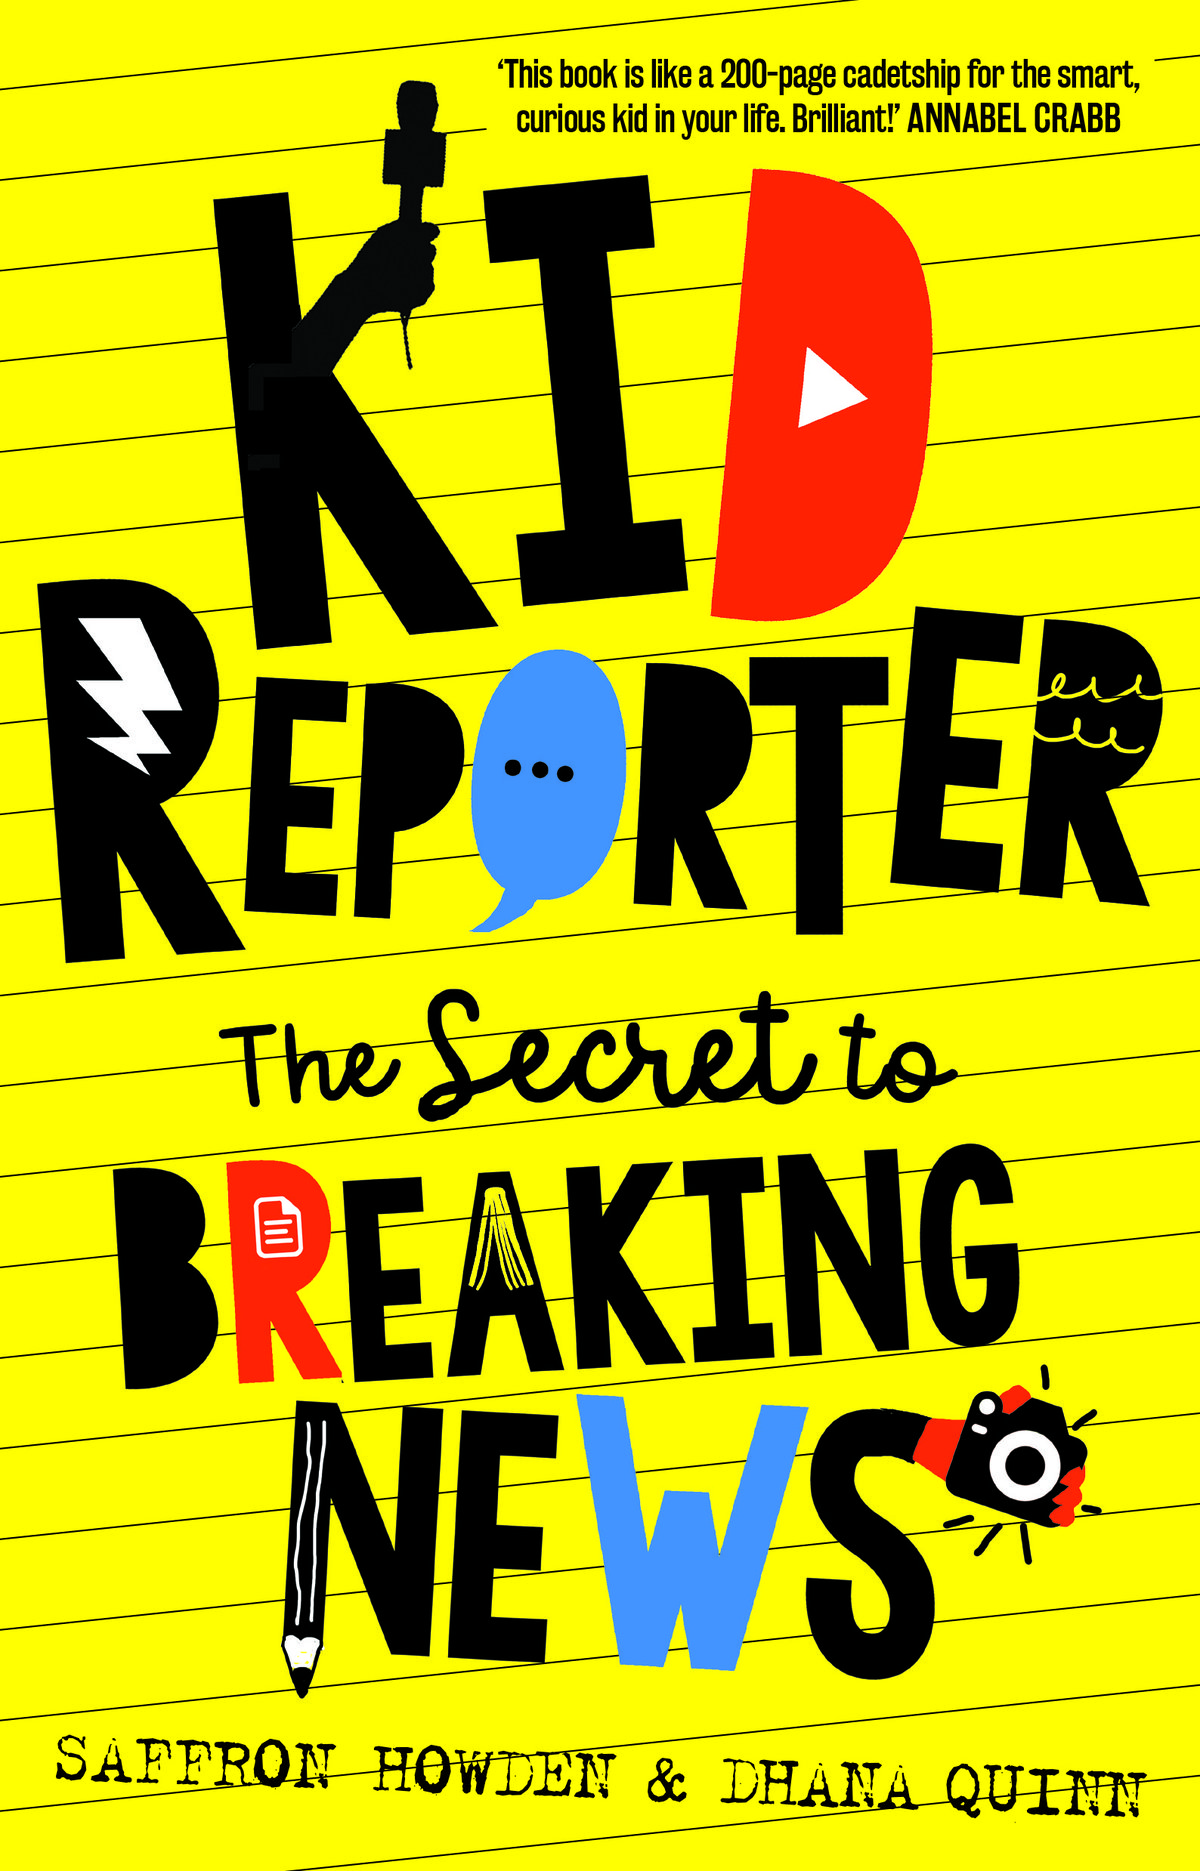 Kid Reporter: The secret to breaking news